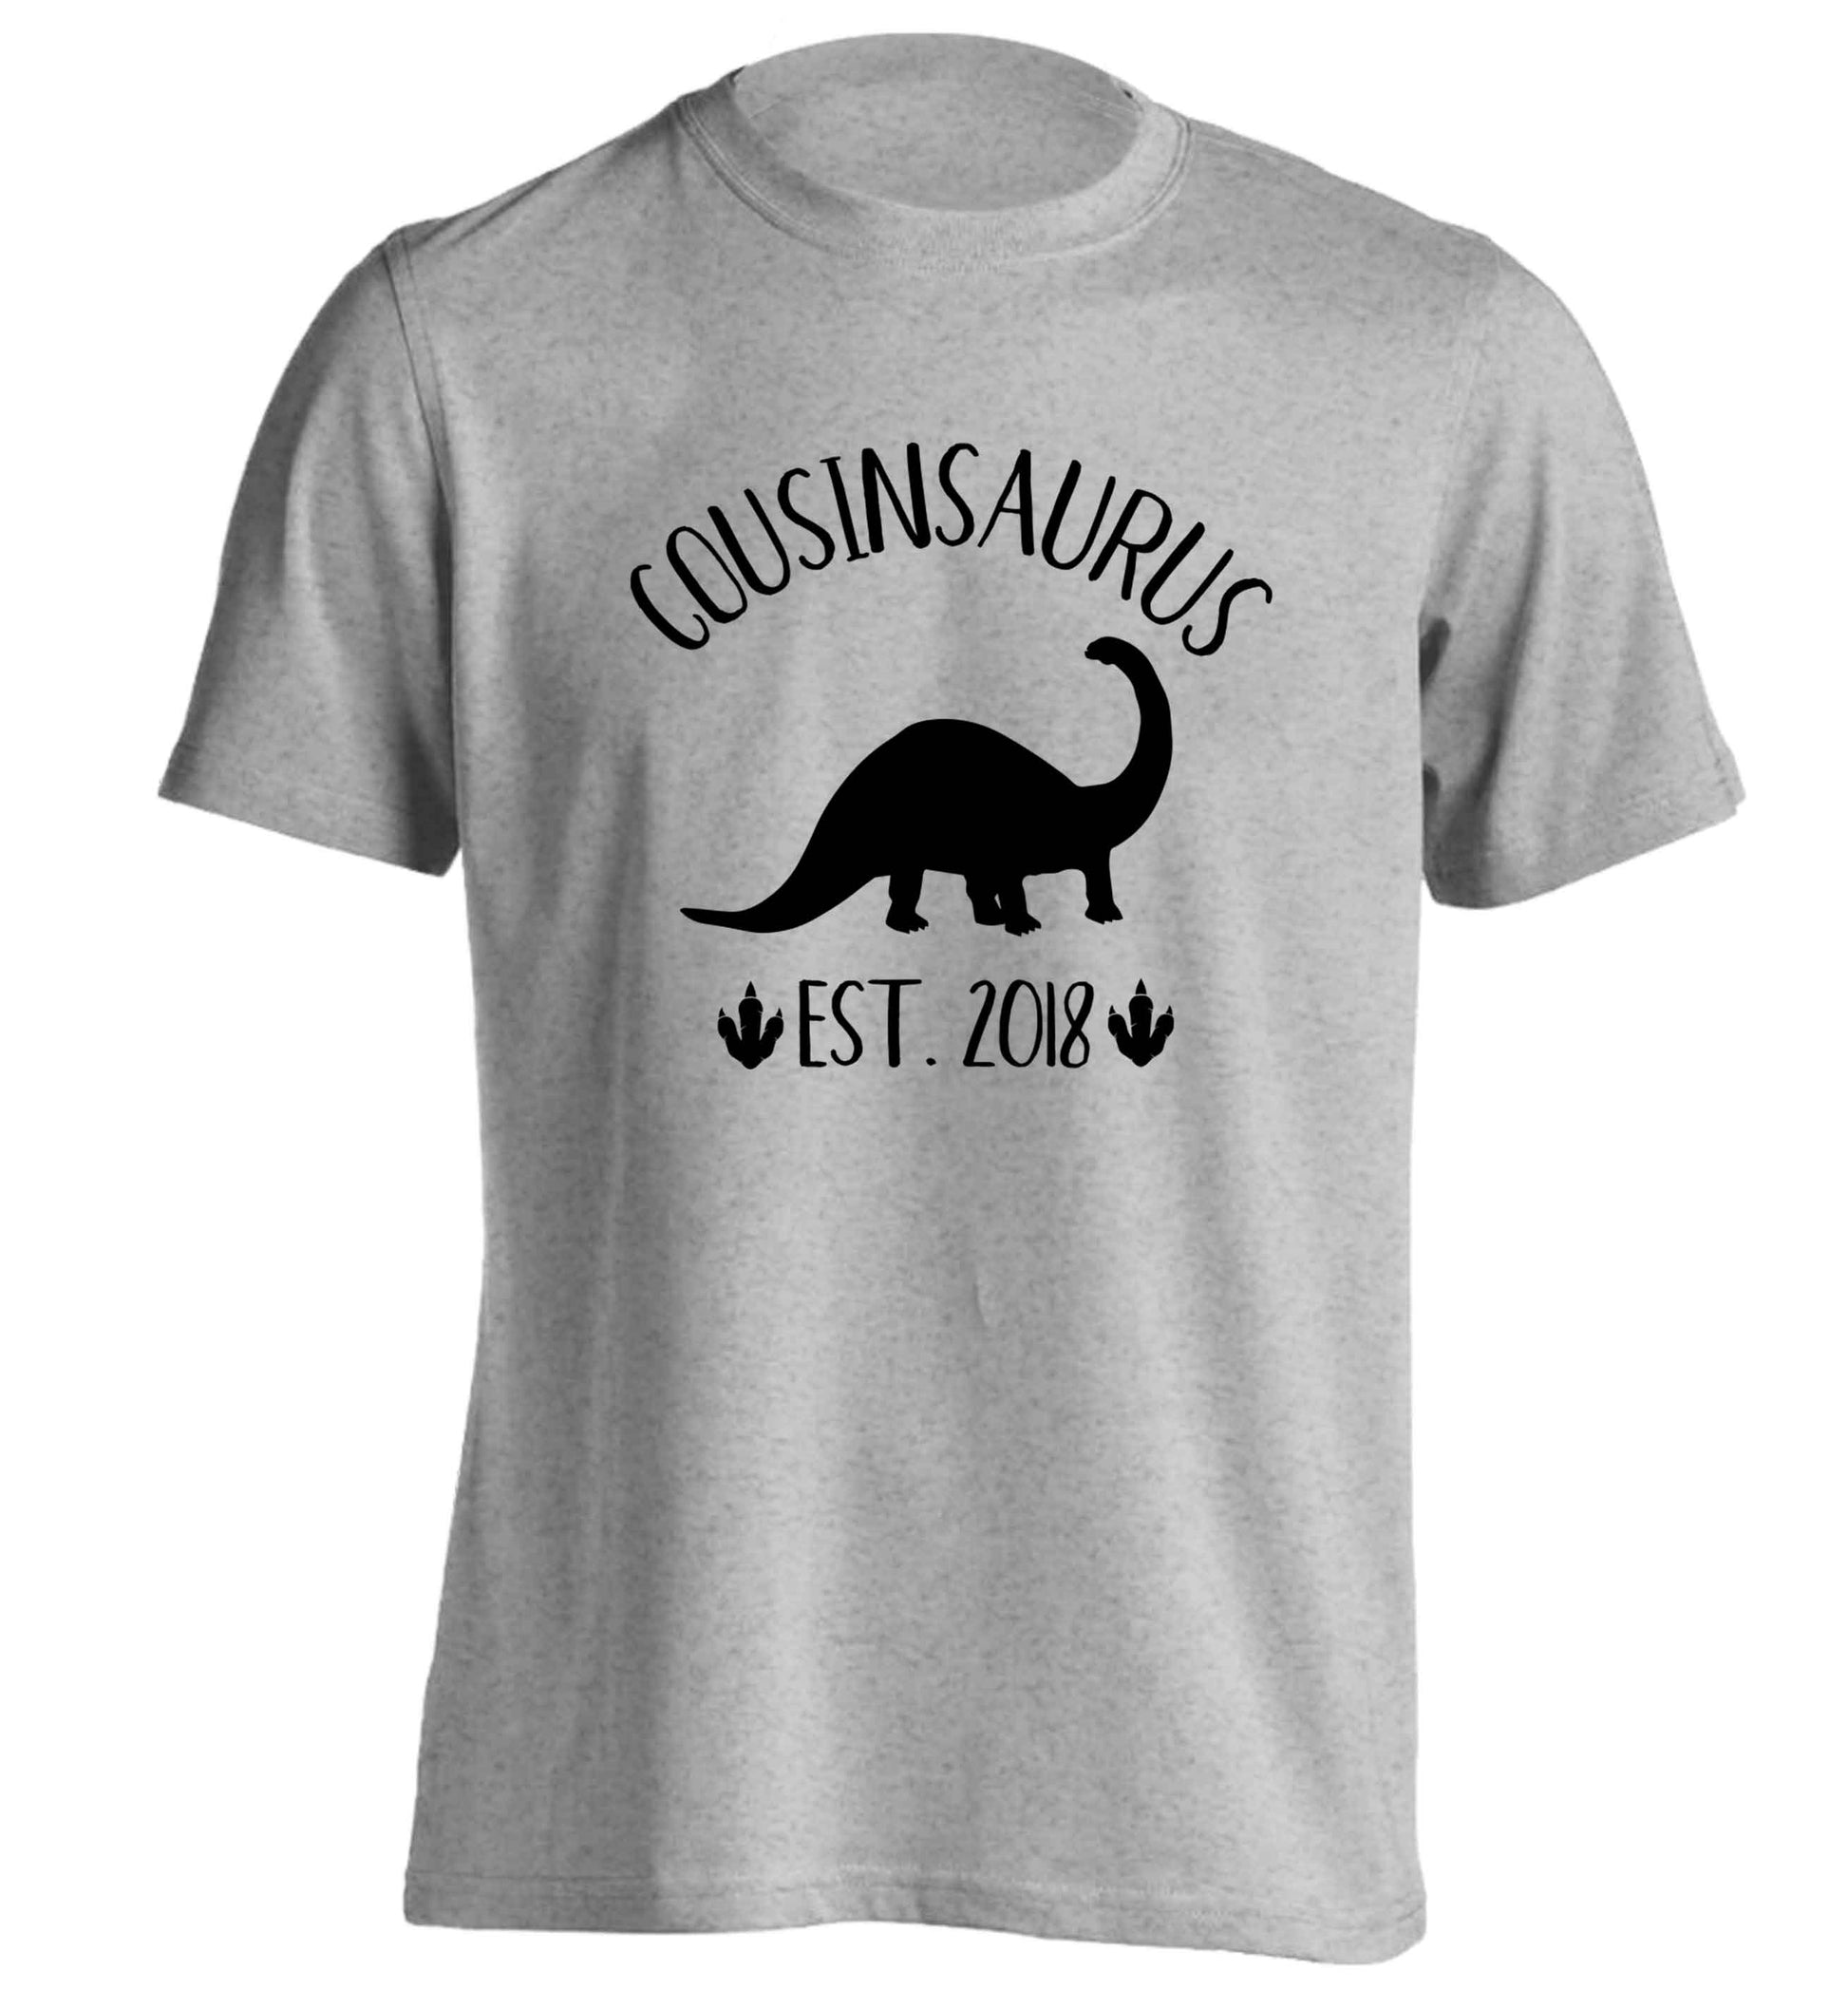 Personalised cousinsaurus since (custom date) adults unisex grey Tshirt 2XL